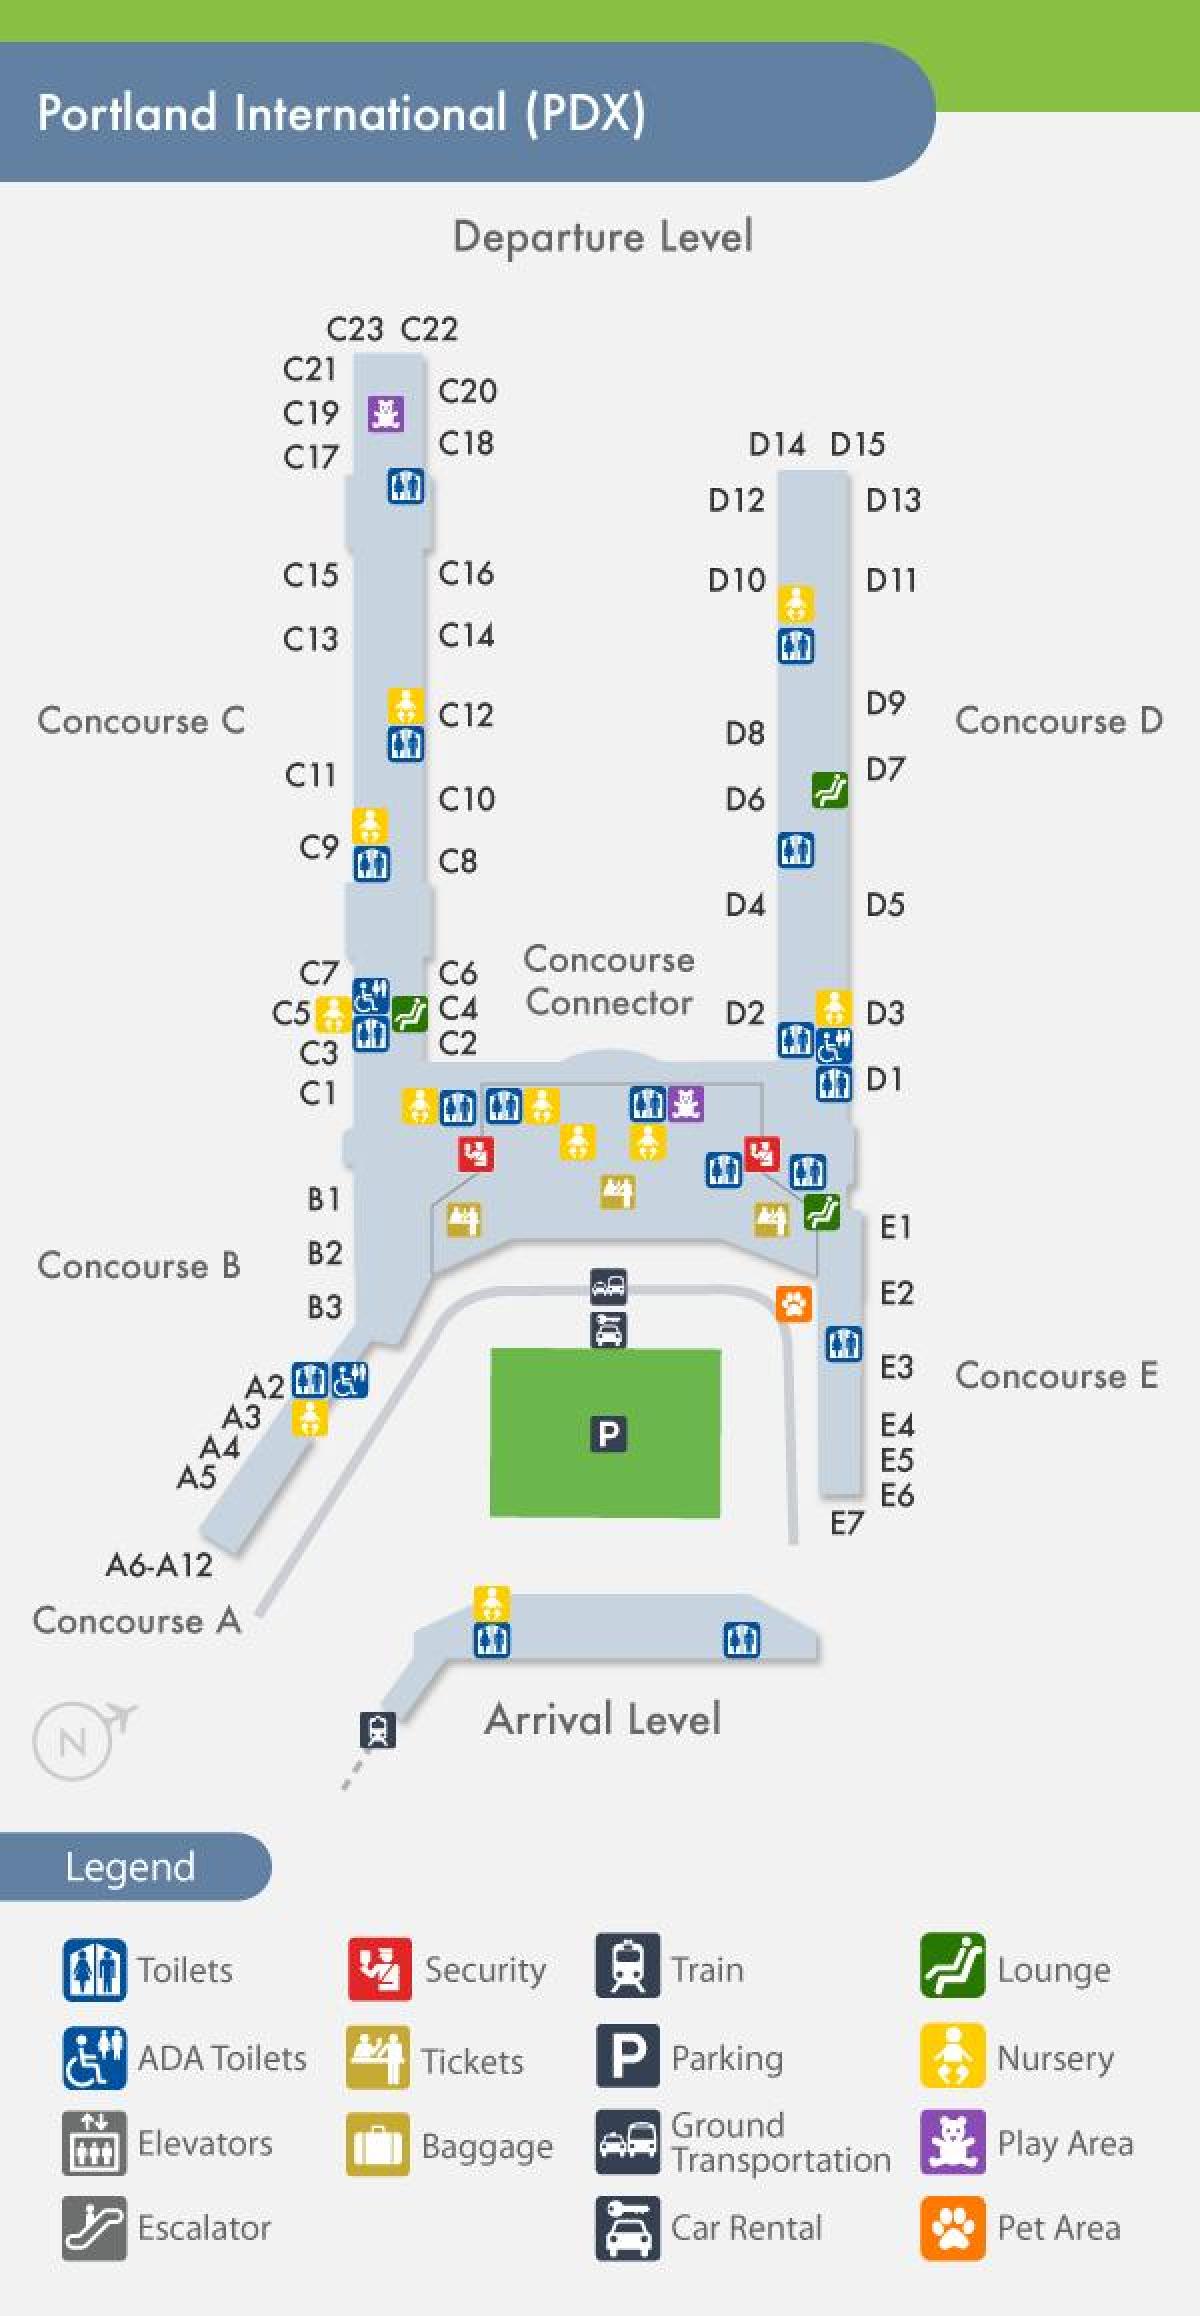 PDX kort over lufthavnen